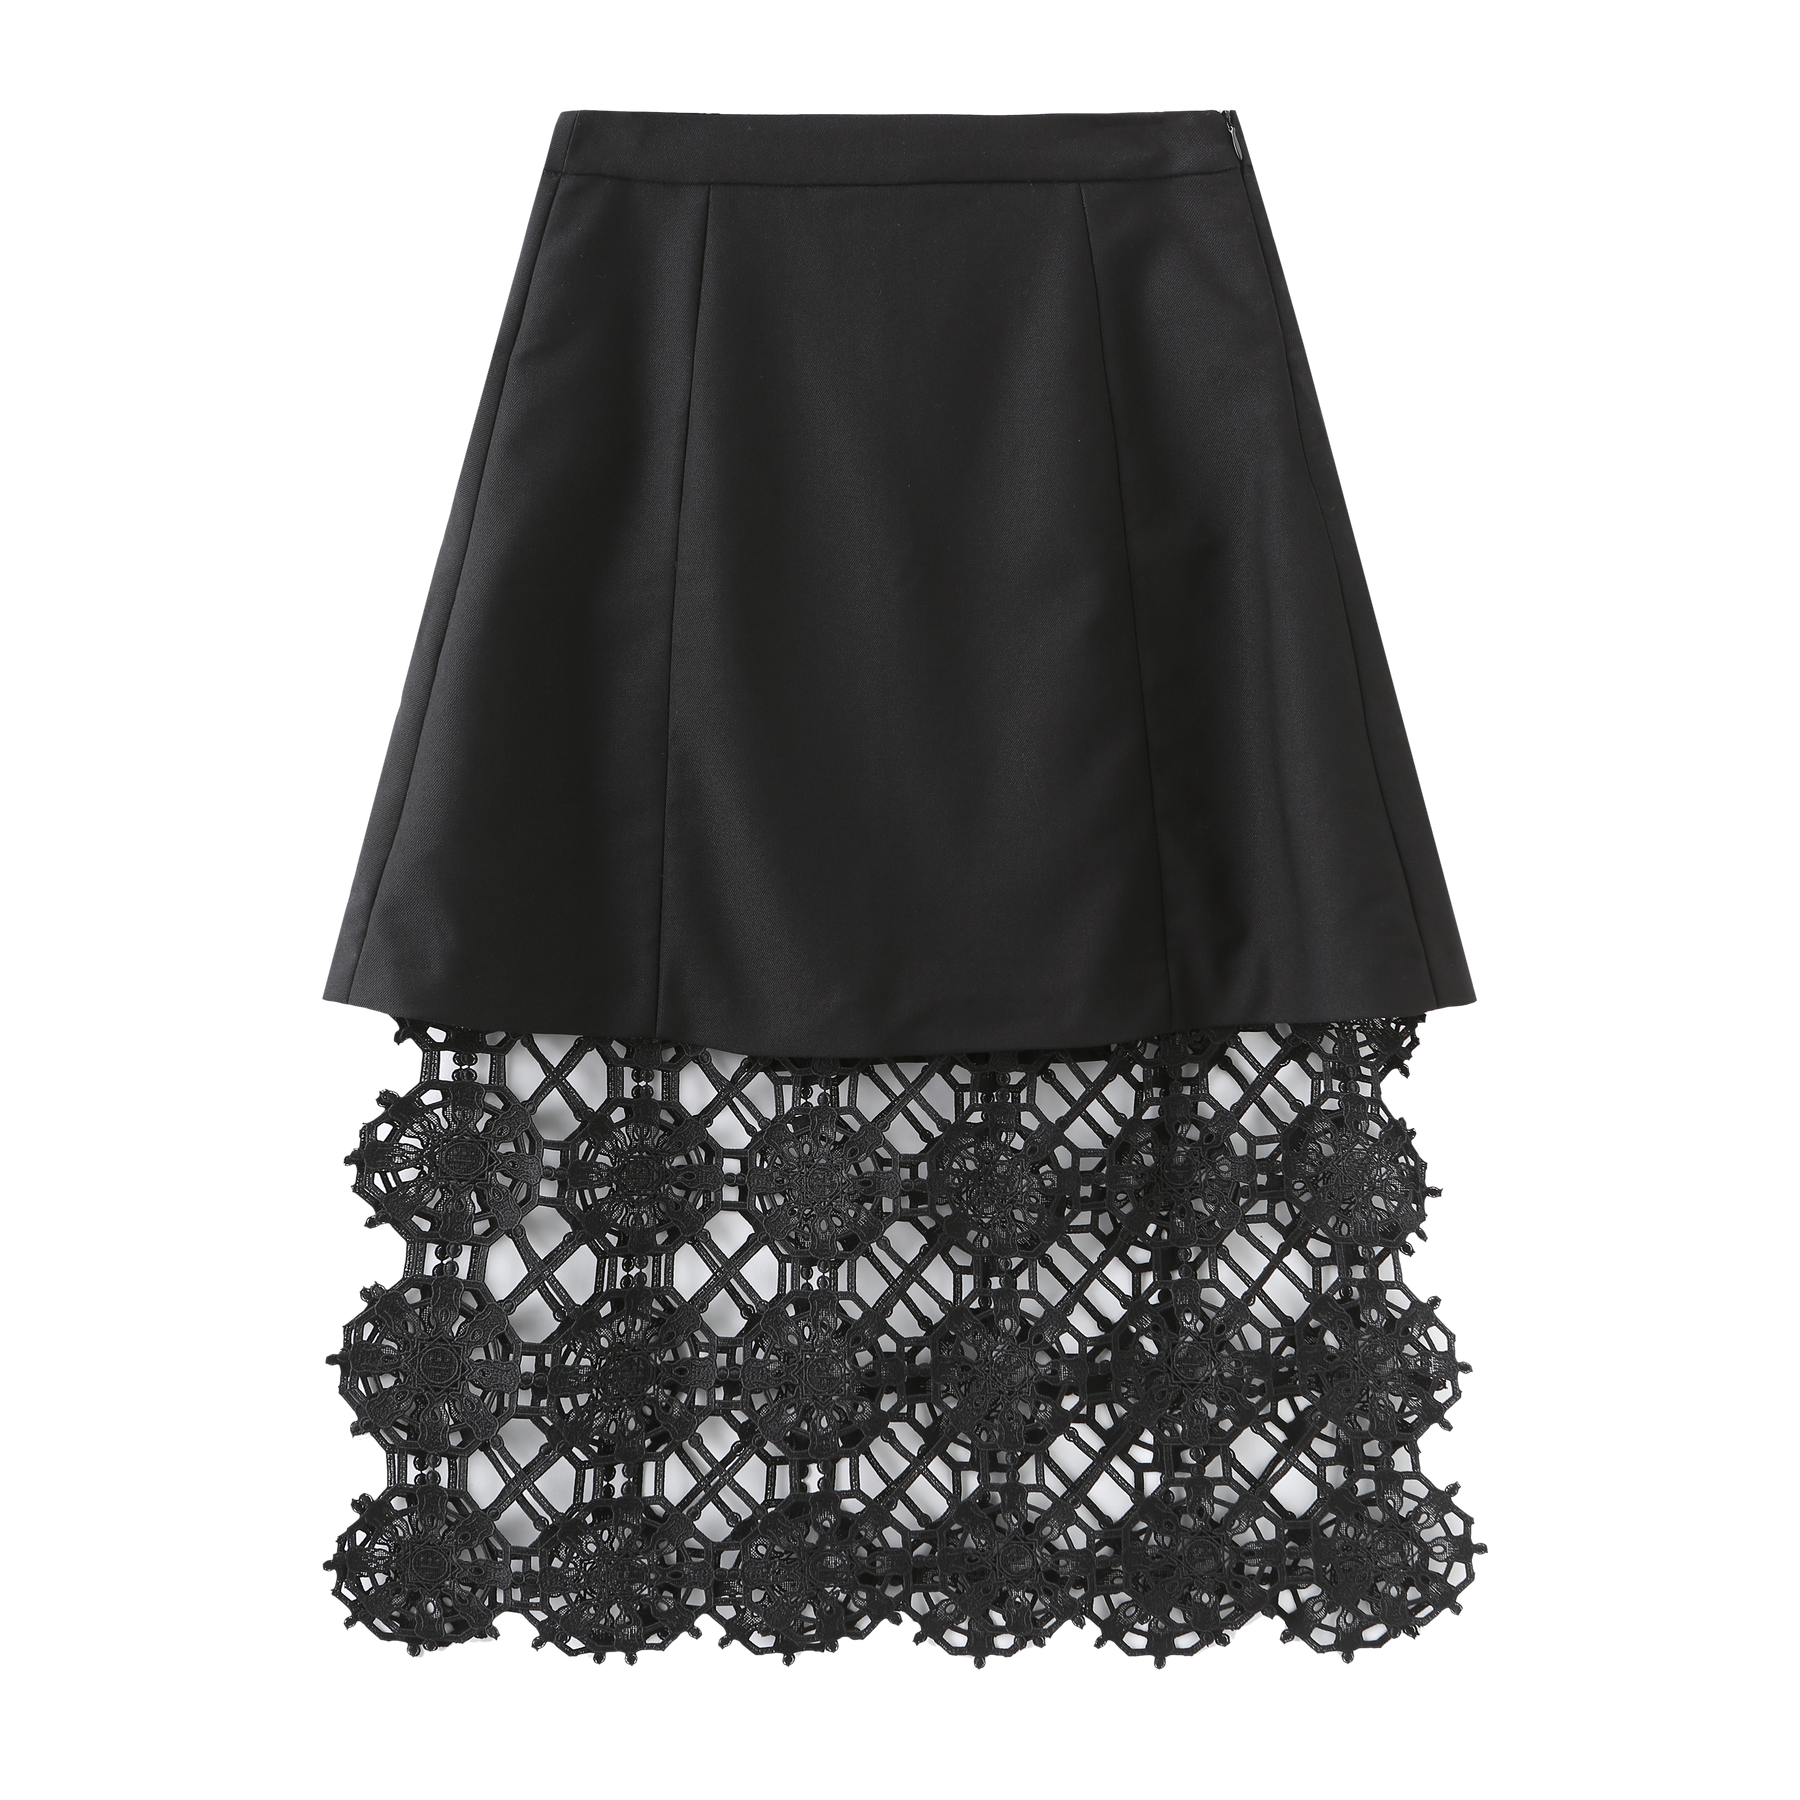 Melting Man Lace Skirt_Black